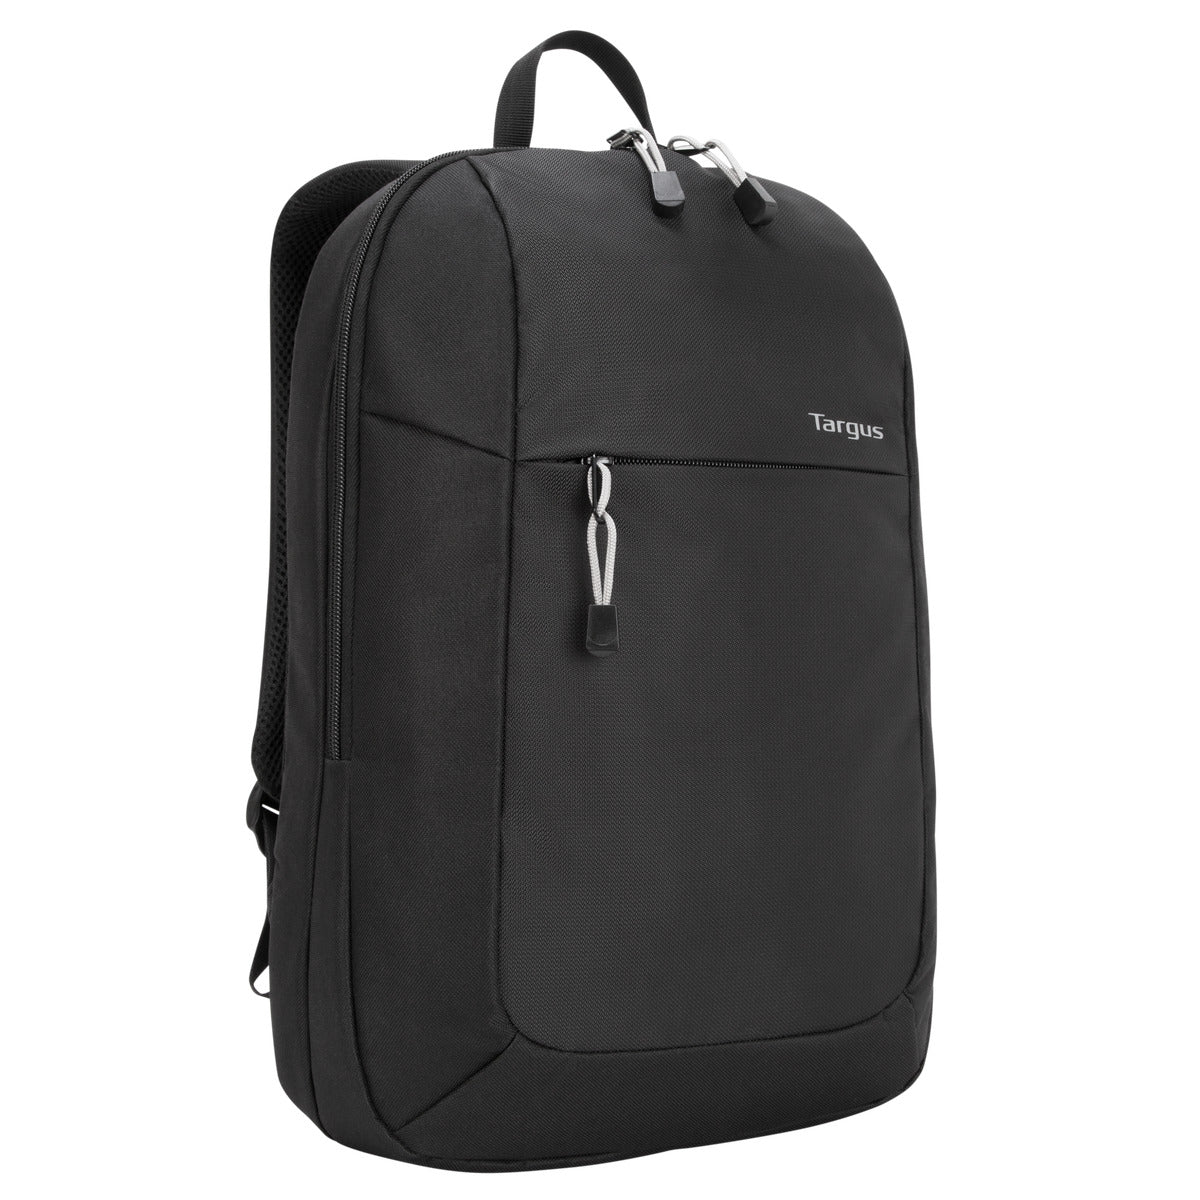 Intellect Advanced (Black) 15.6-inch Backpack | Targus Laptop